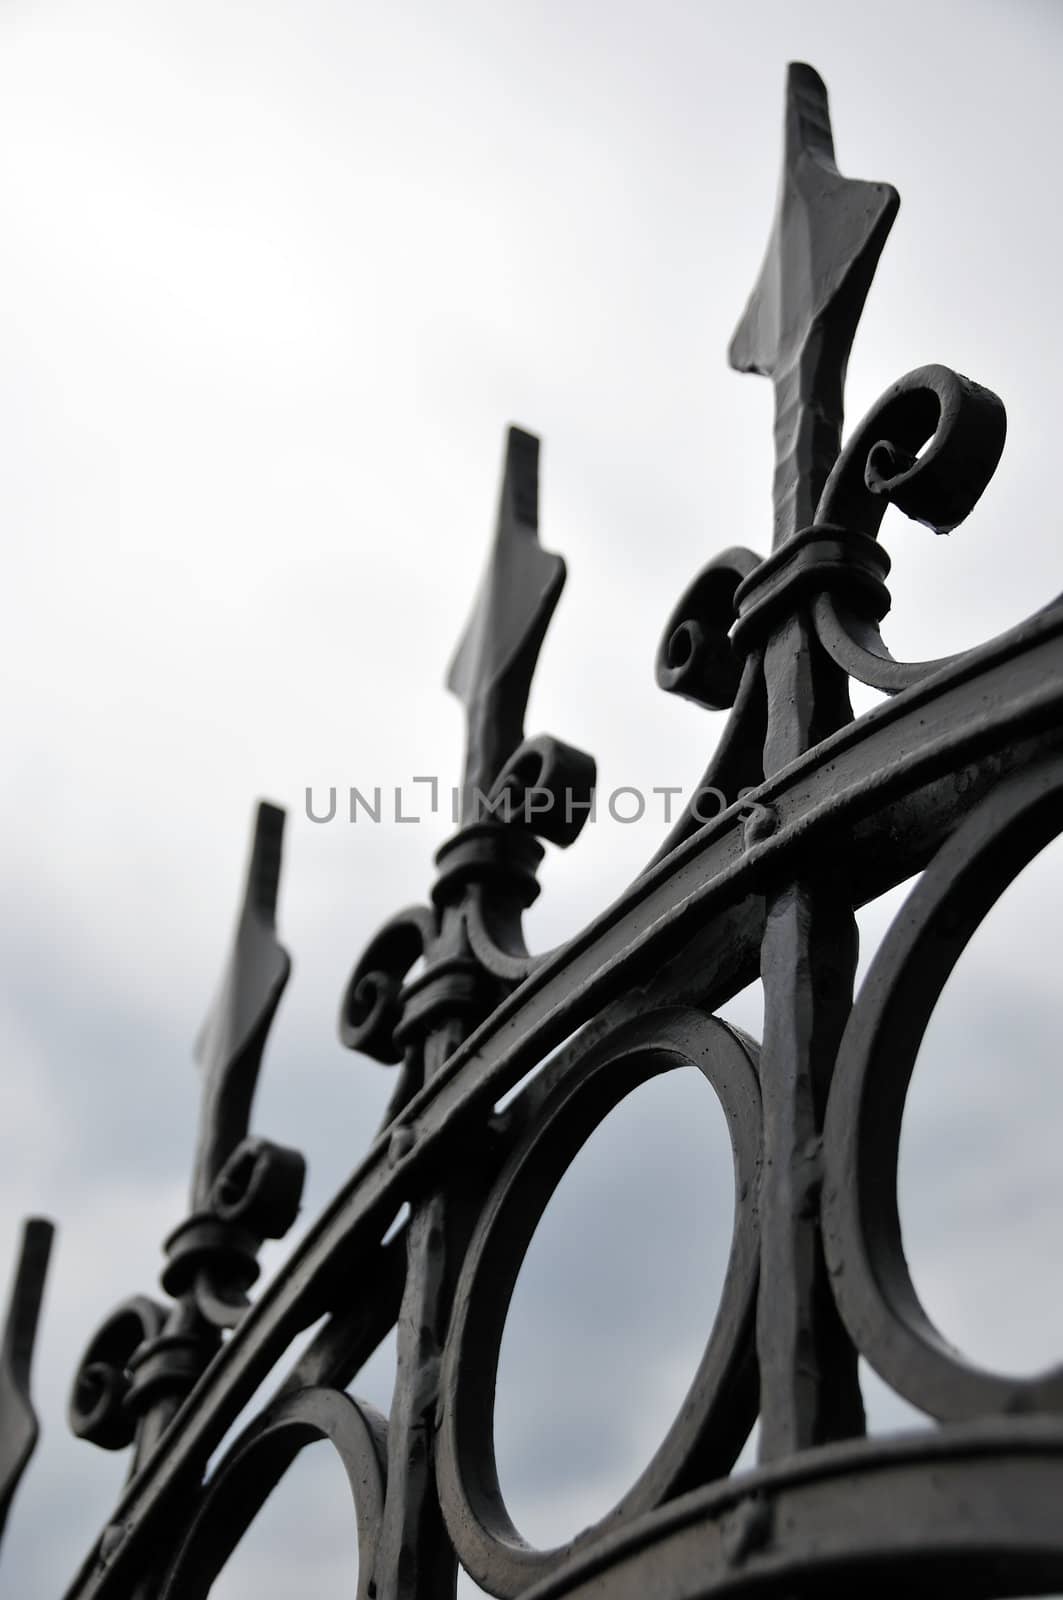 Sharp decorative iron fence against cloudy sky